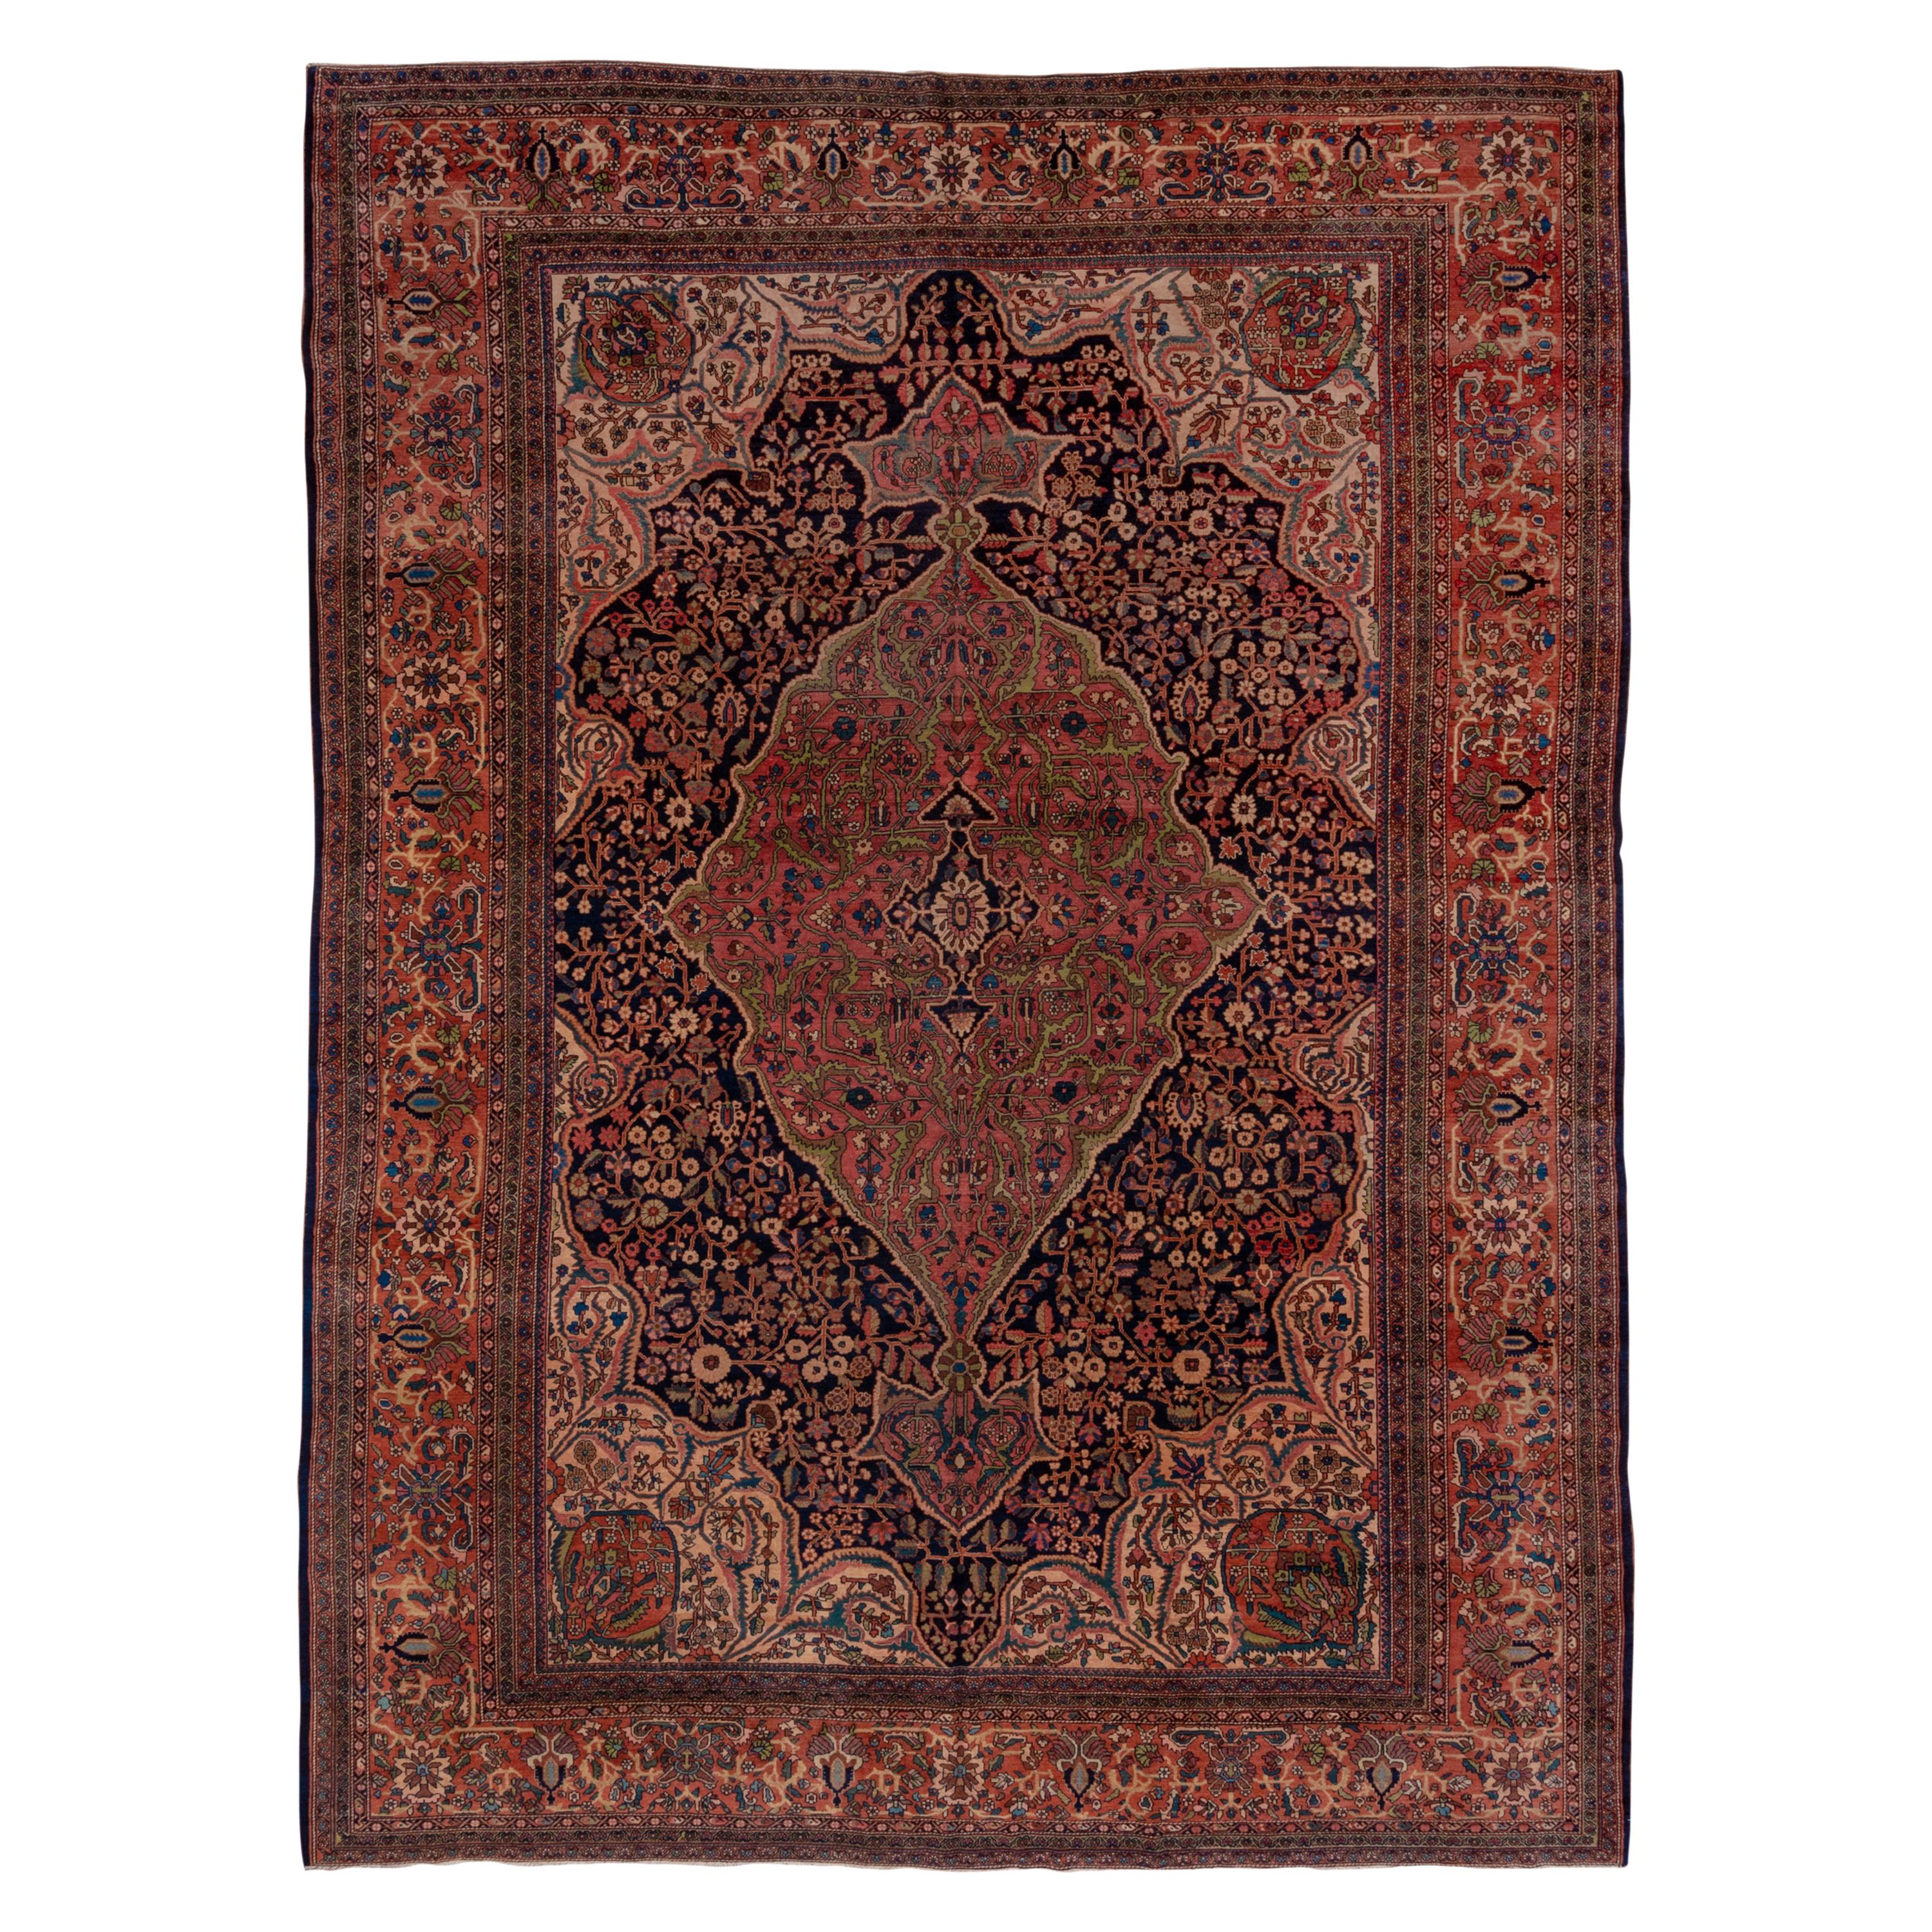 Gorgeous Antique Sarouk Farahan Carpet, Pink, Green, Navy and Orange Accents